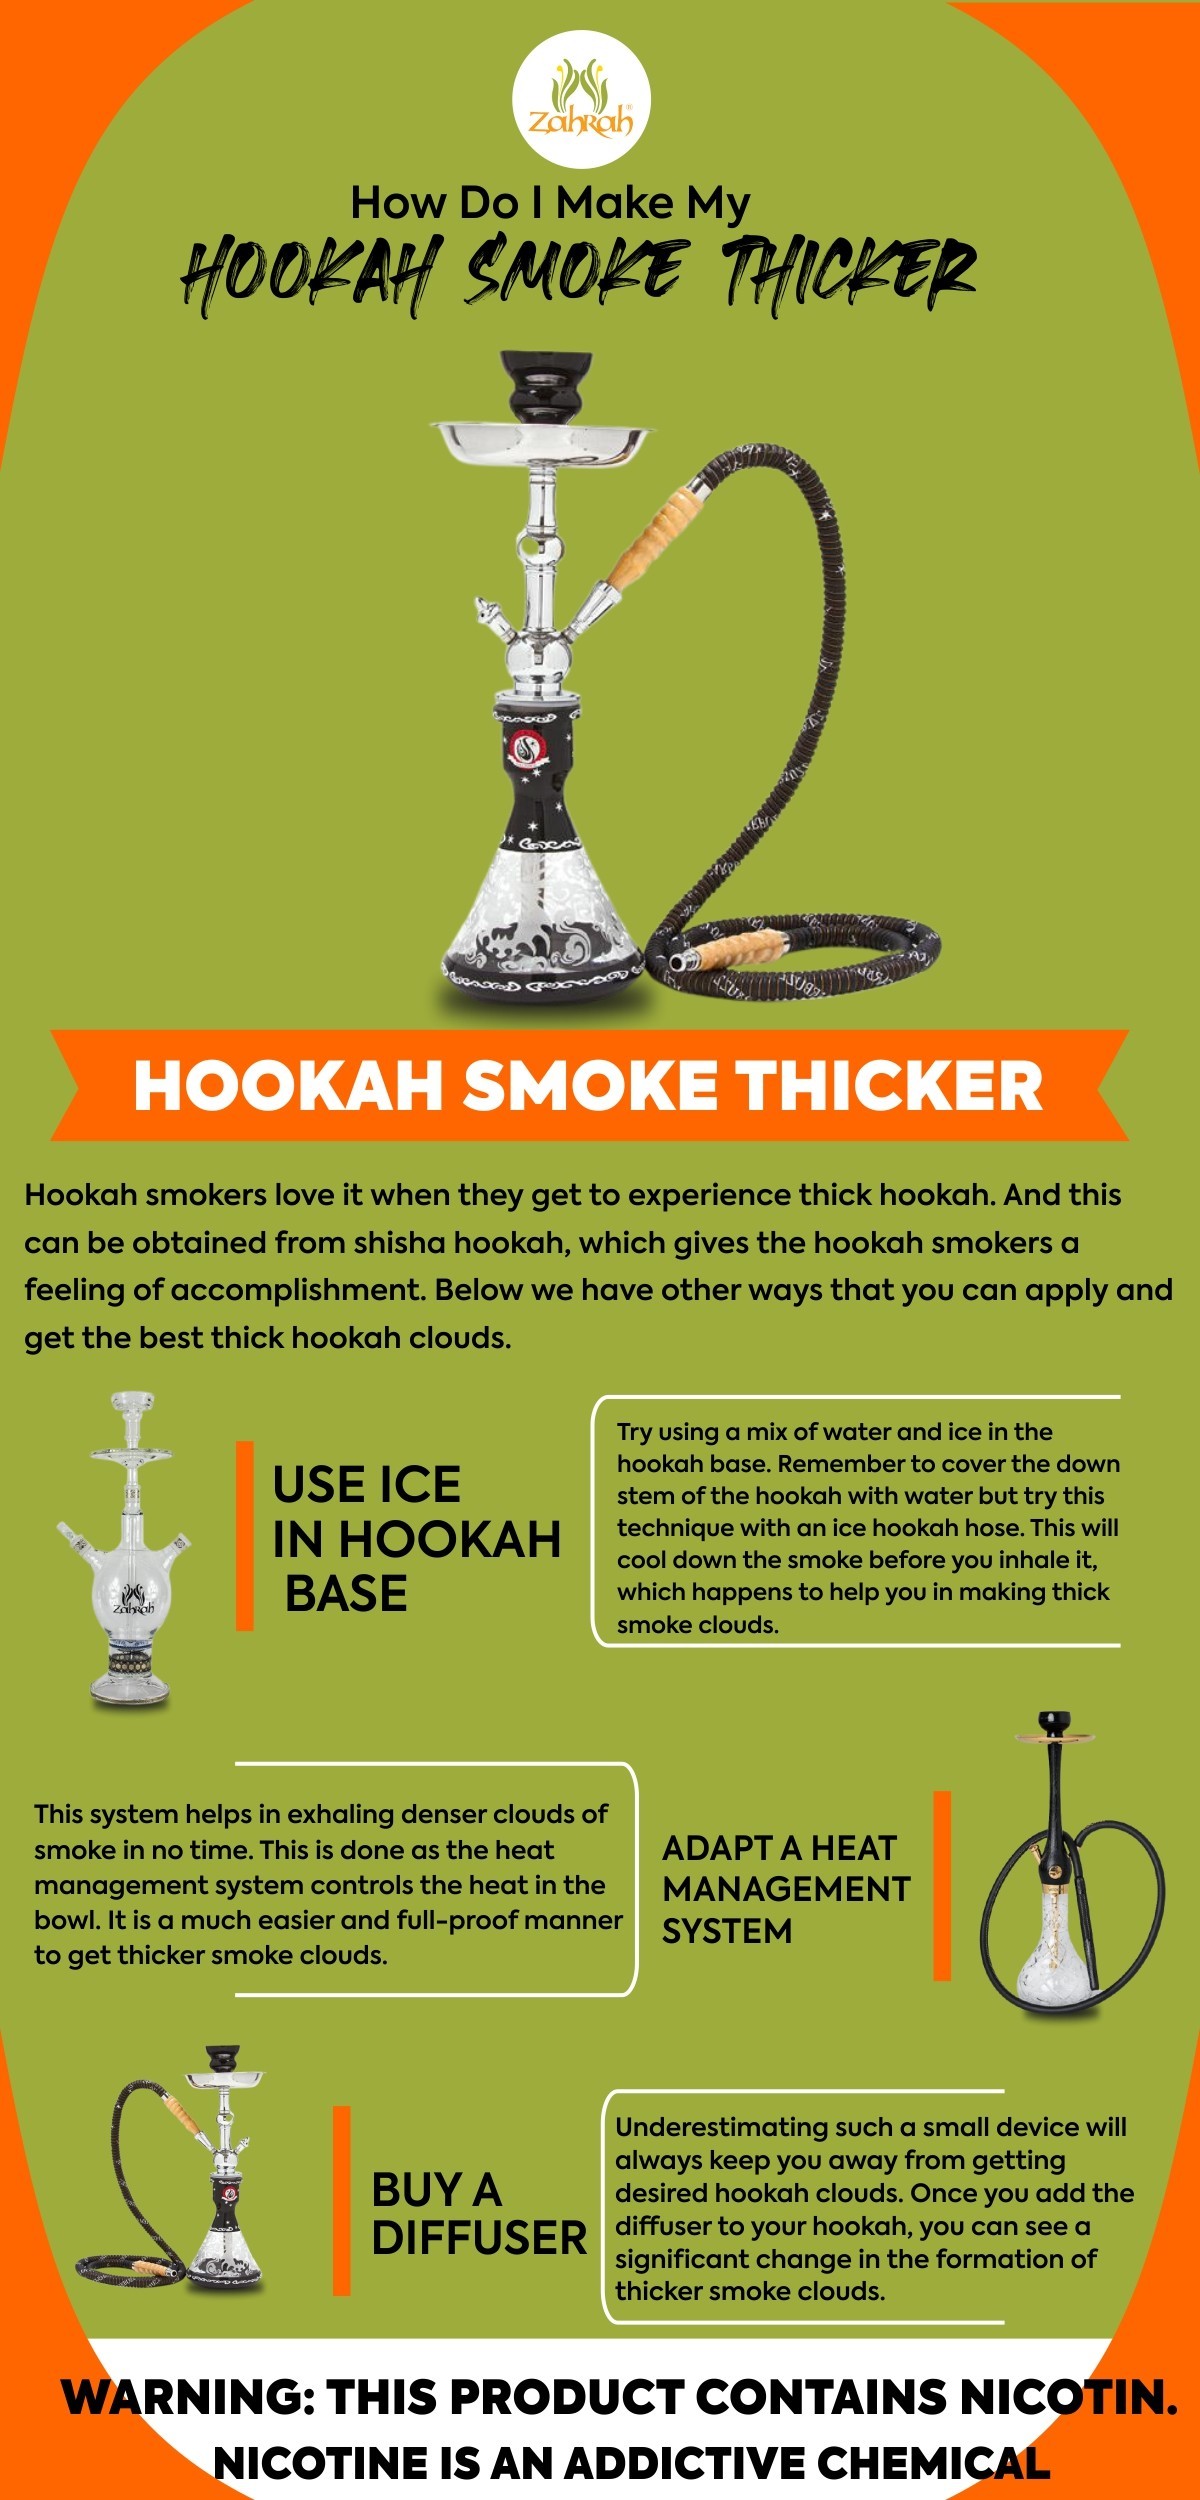 How Do I Make My Hookah Smoke Thicker?